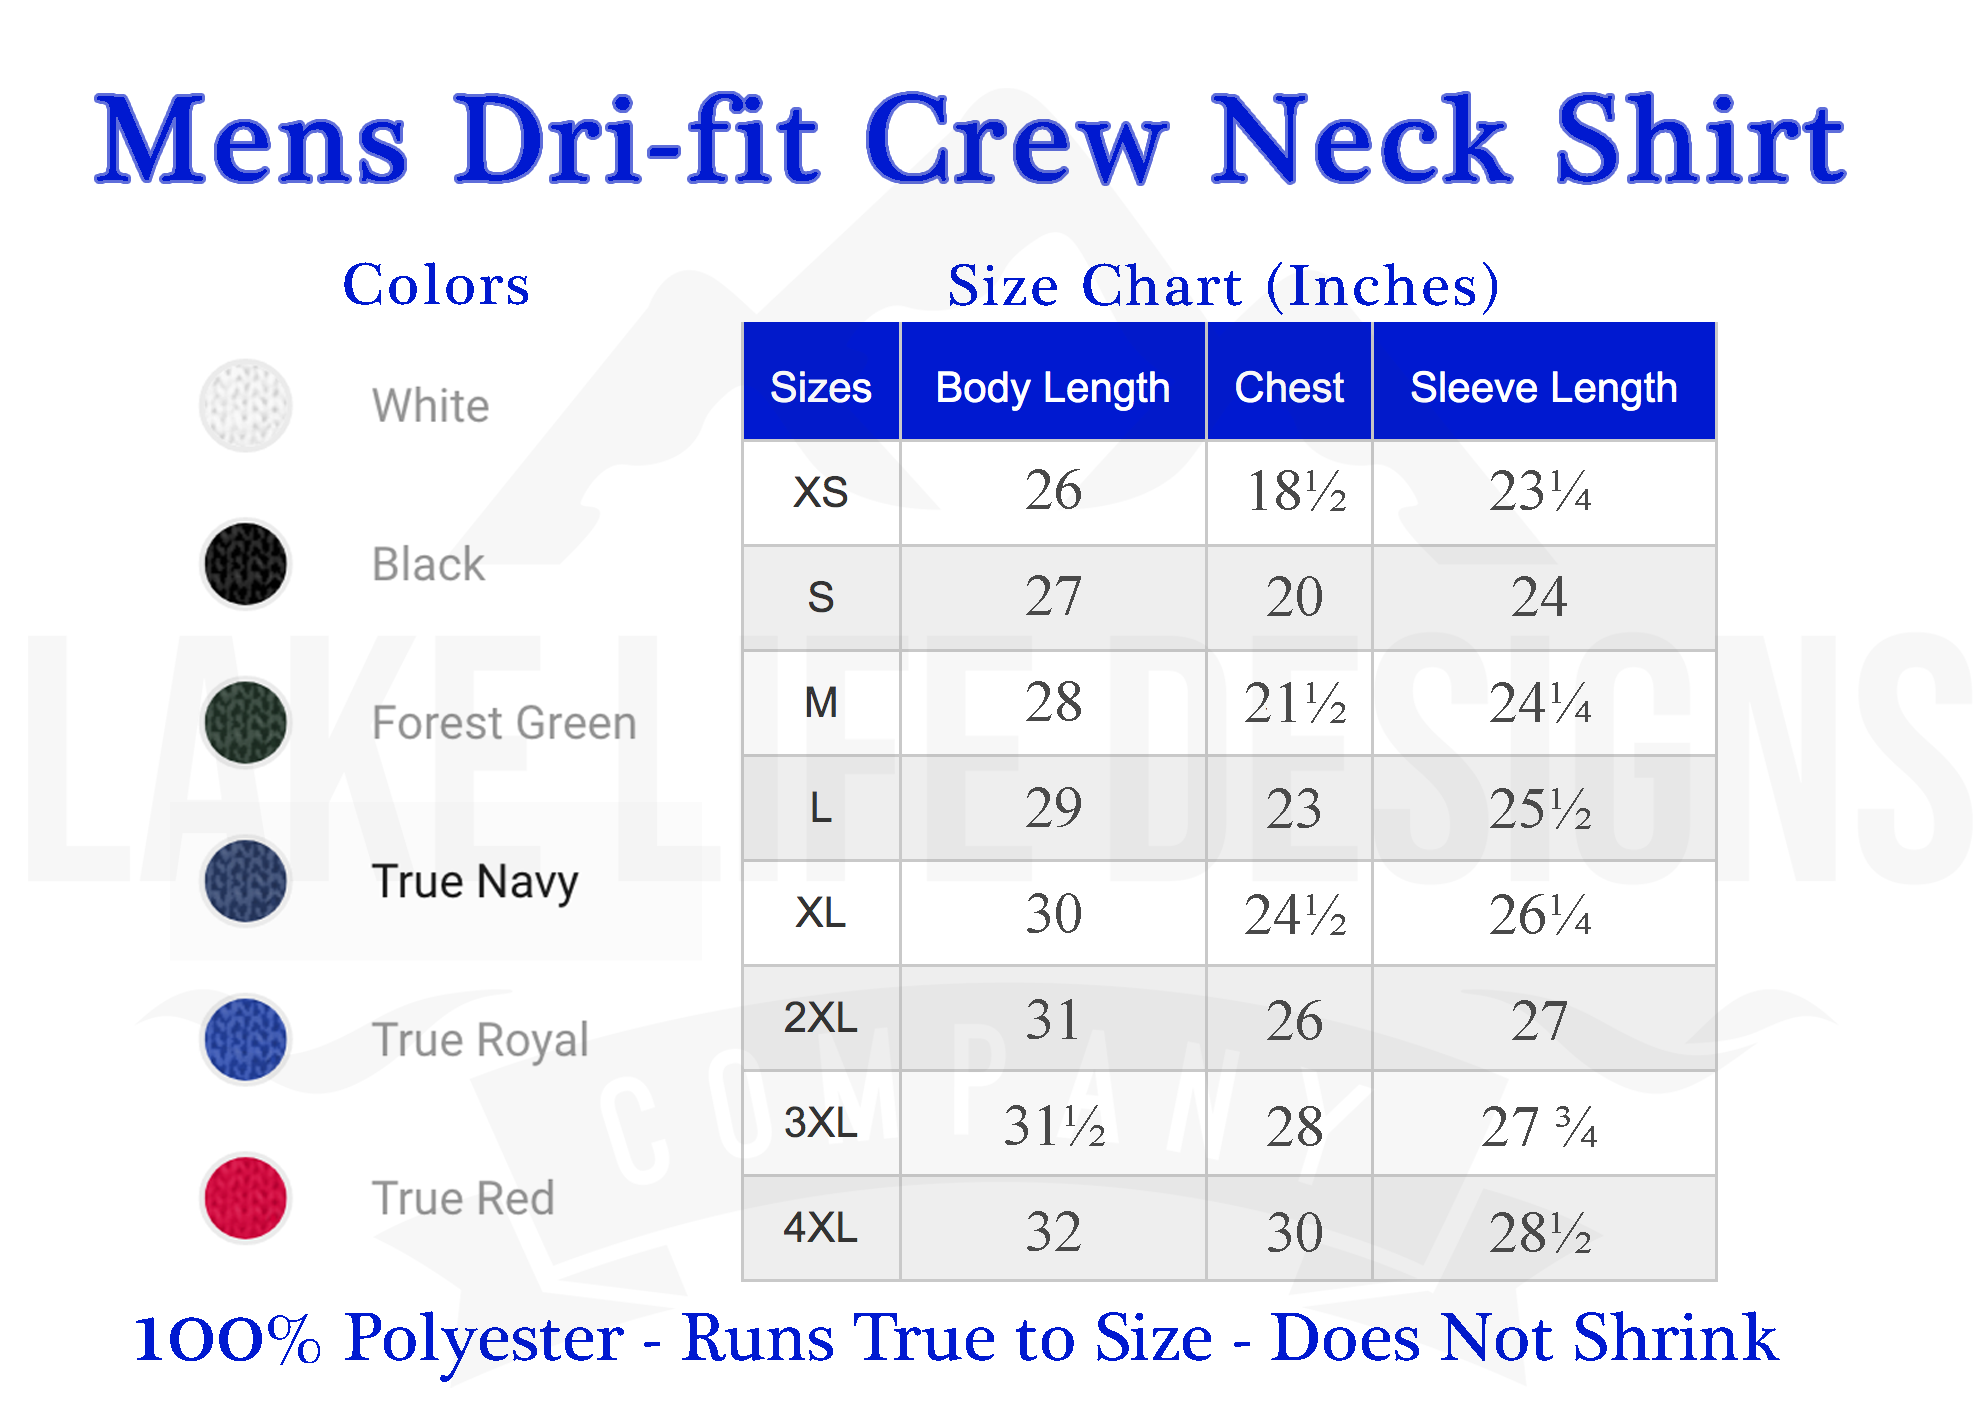 Oneida Lake Life Dri-fit Boating Shirt - Breathable Material- Men's Long Sleeve Moisture Wicking Tee - New York Lake